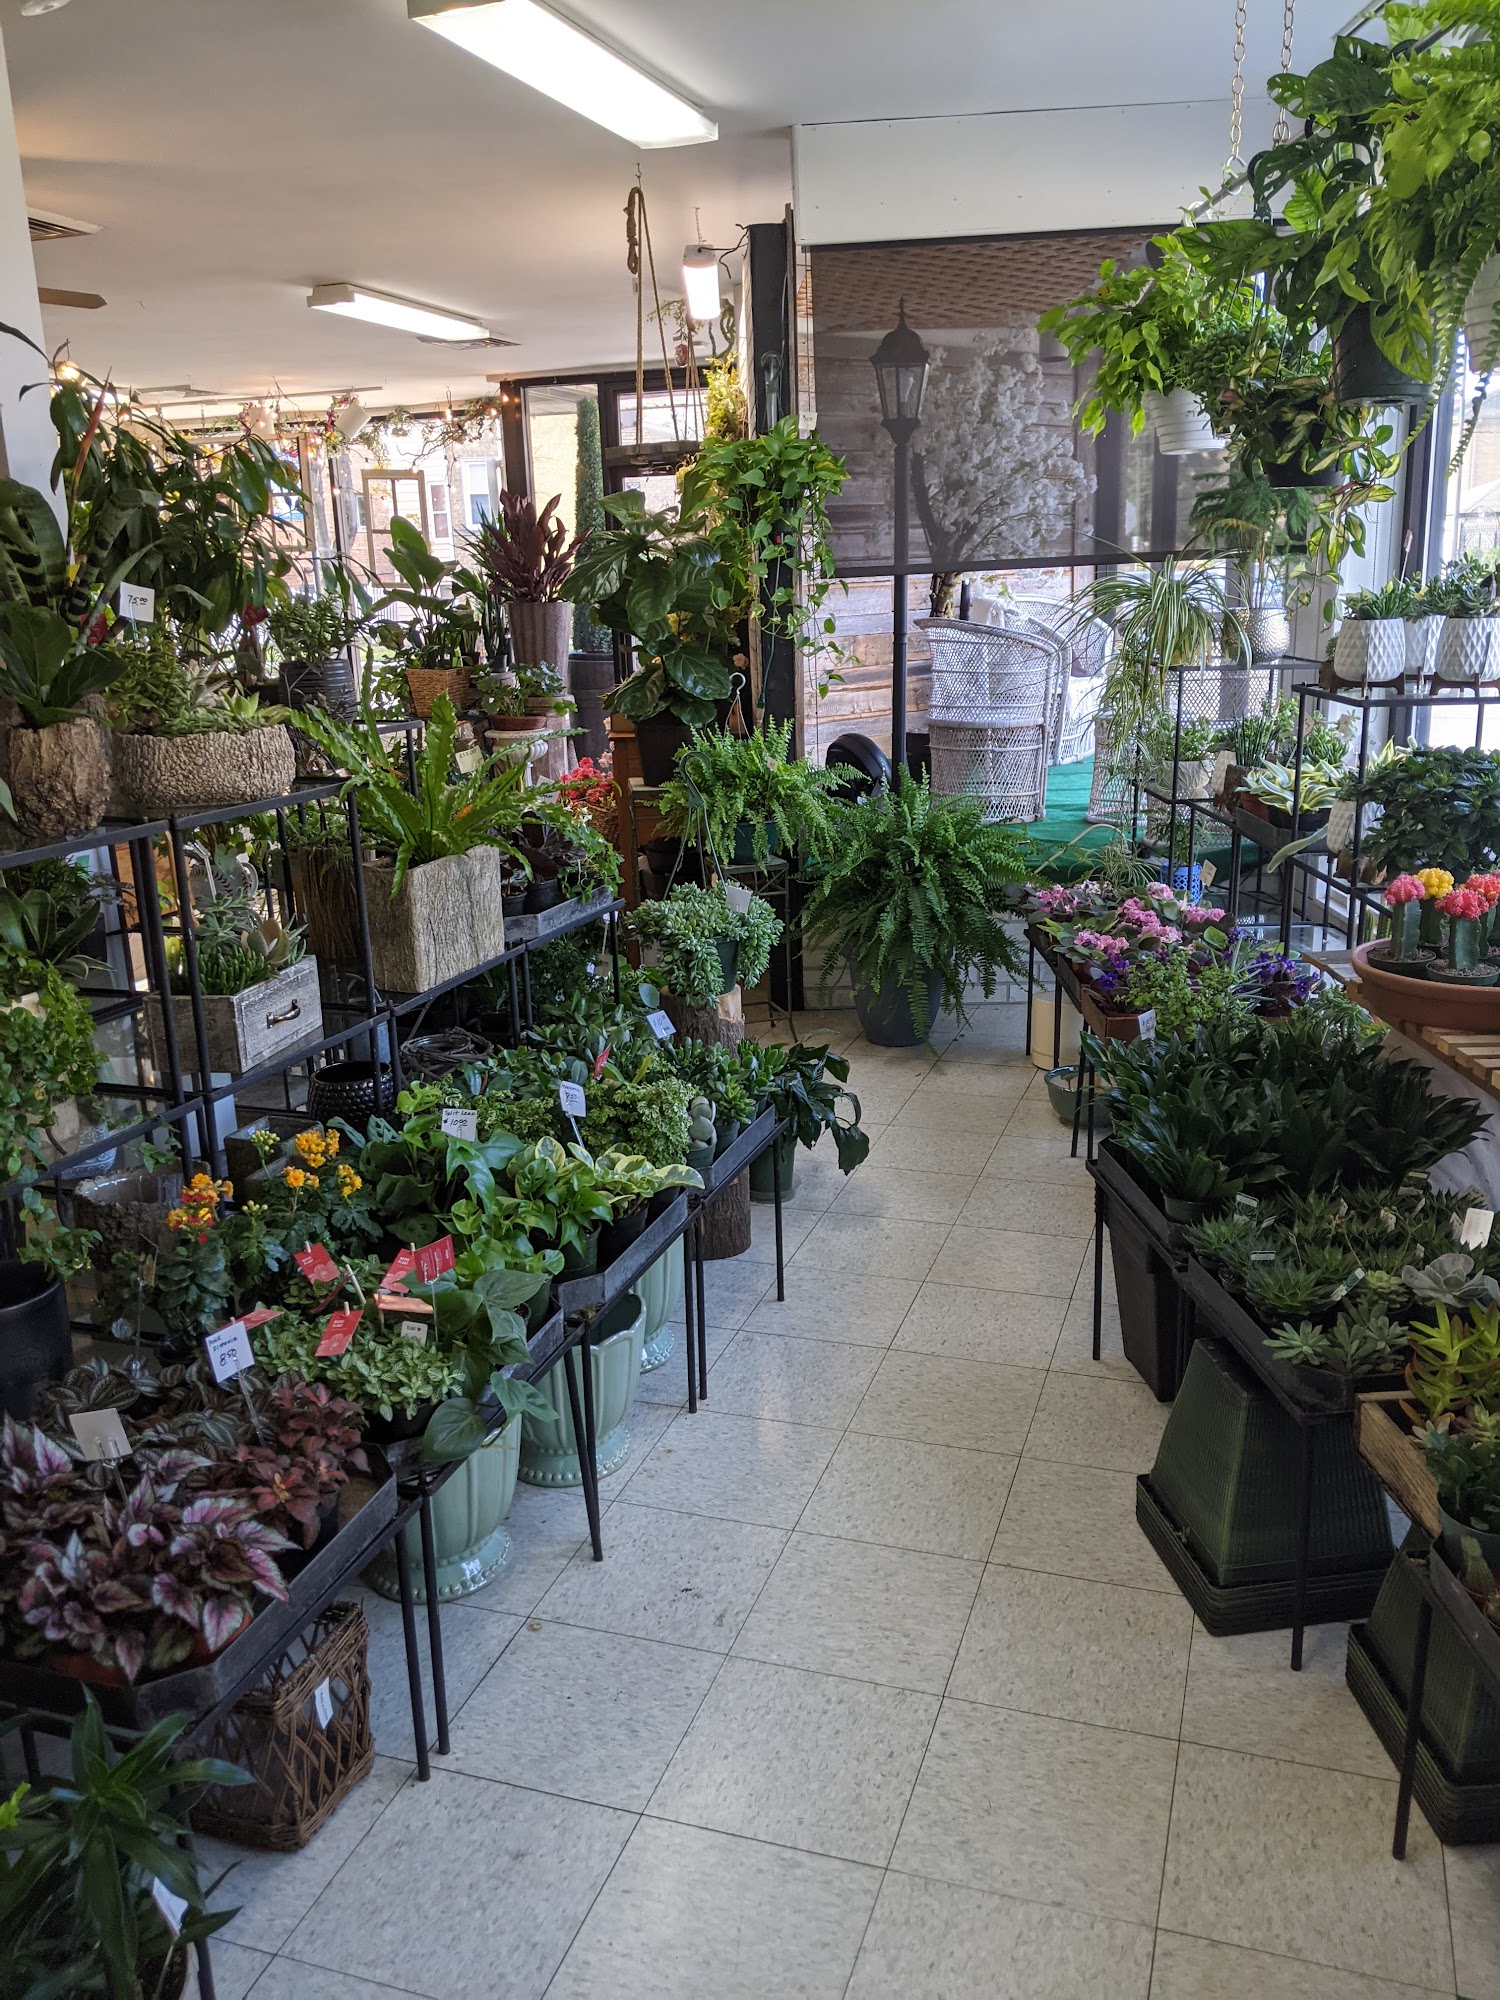 Wall's Flower Shop, Inc.